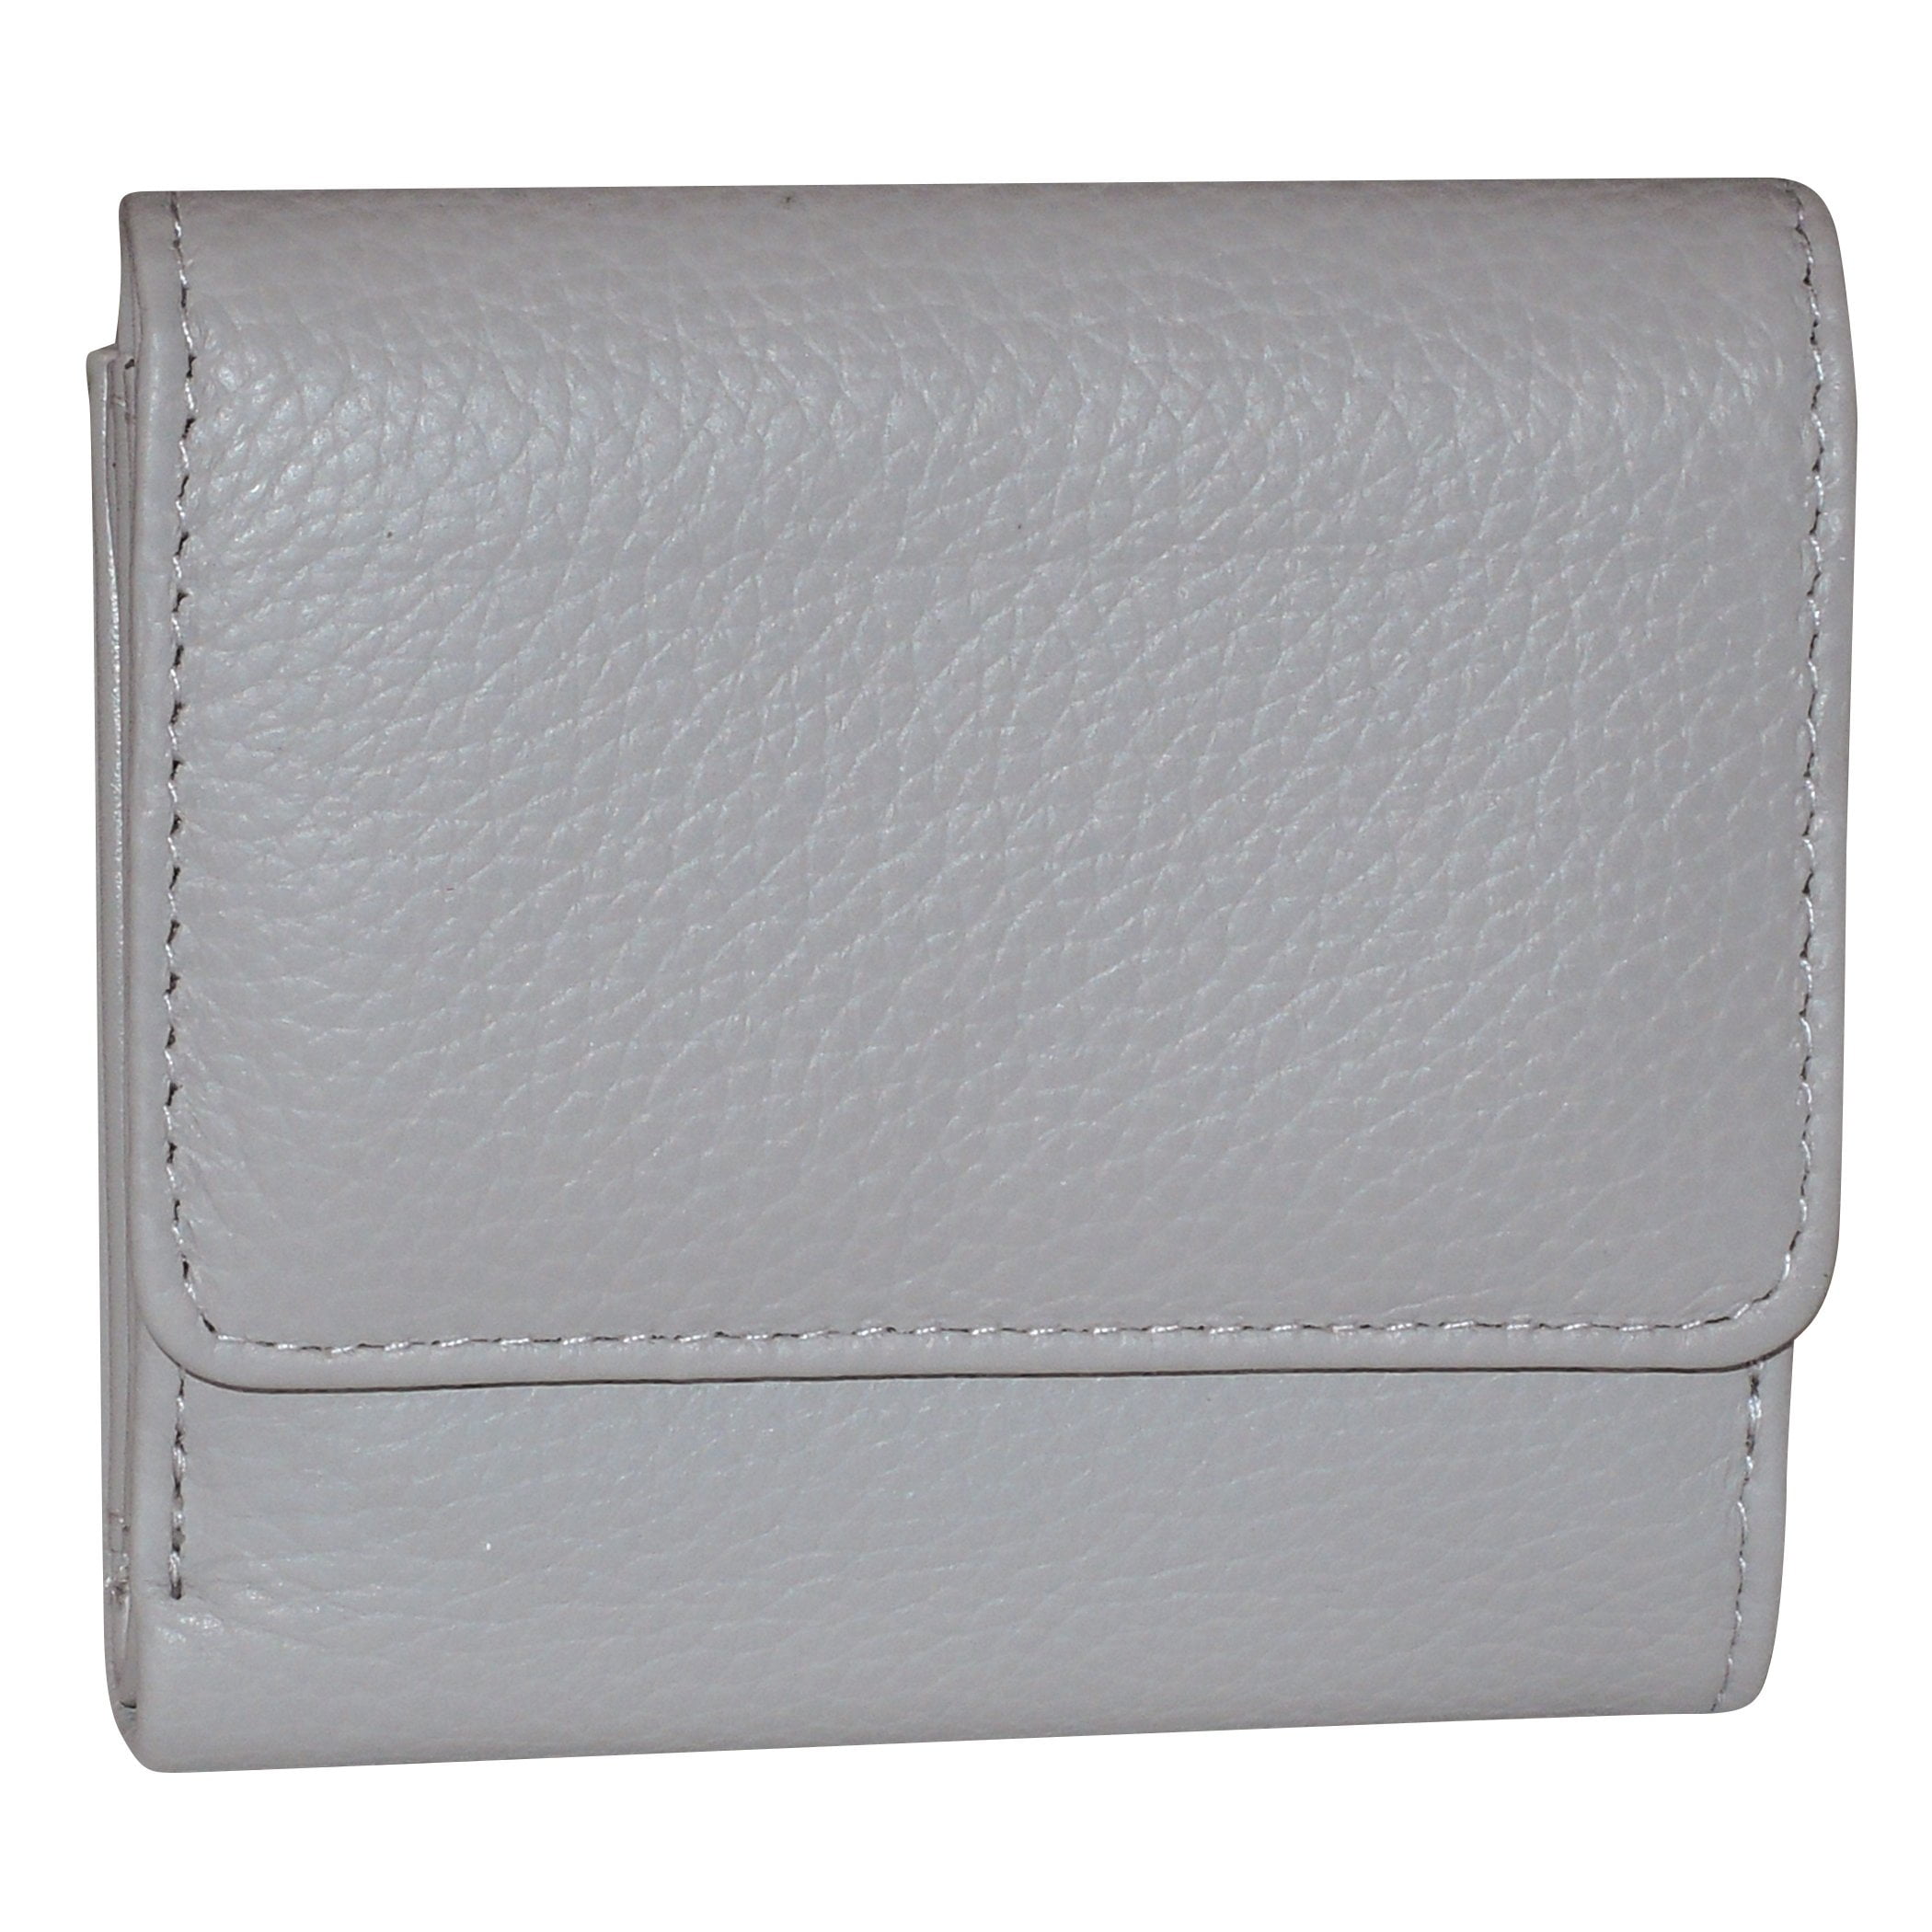 1 ID 1 Change Slot KIDS TriFold Mini Wallet 2 Bill Leather Alligator Imprint 